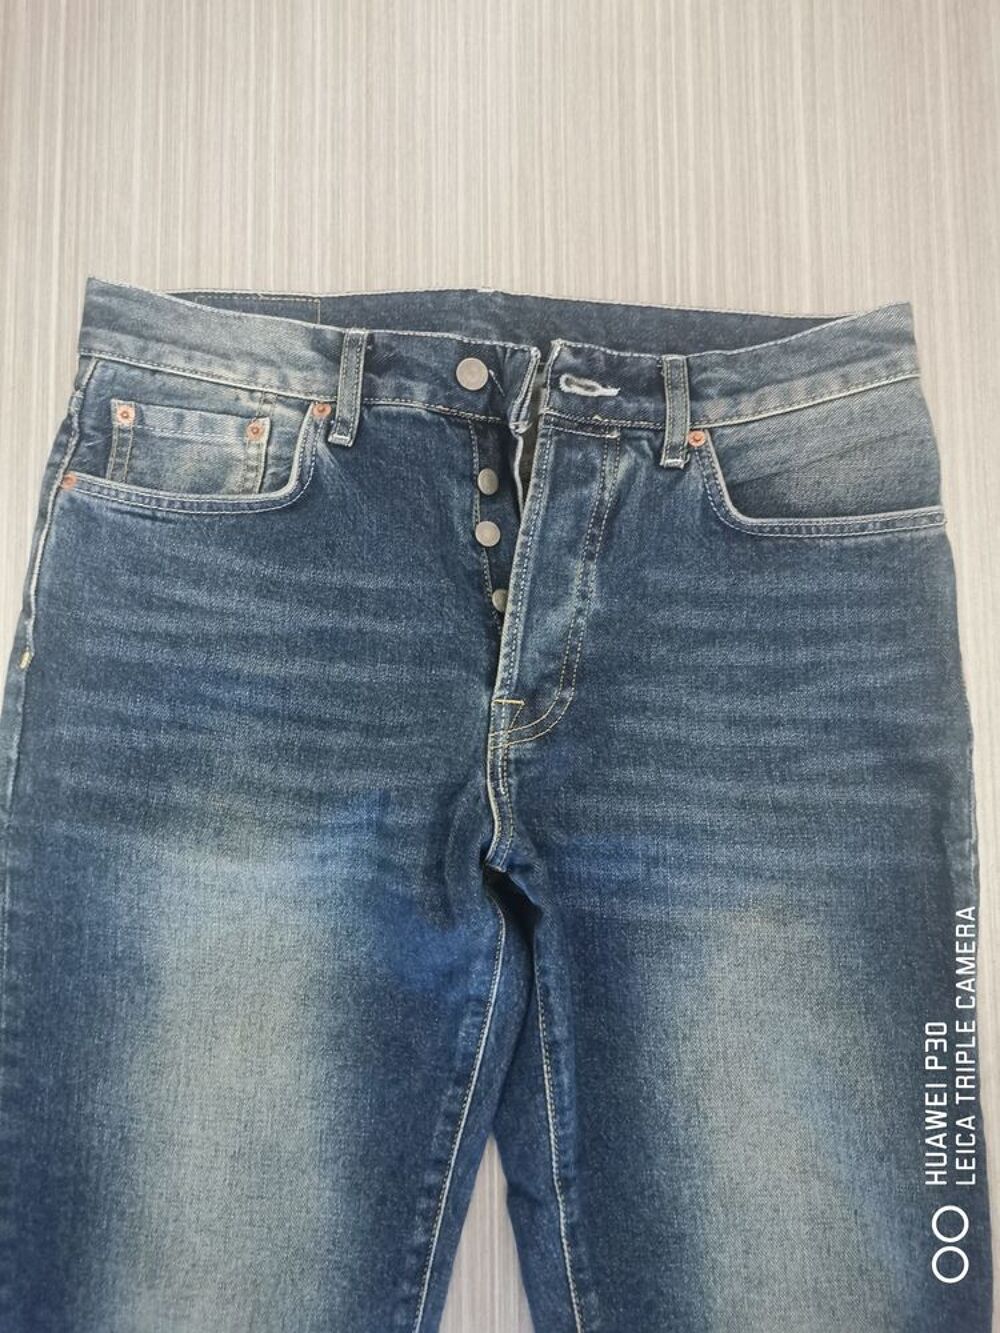 1 Jeans Levi's bleu 501 32x32 comme neuf Vtements